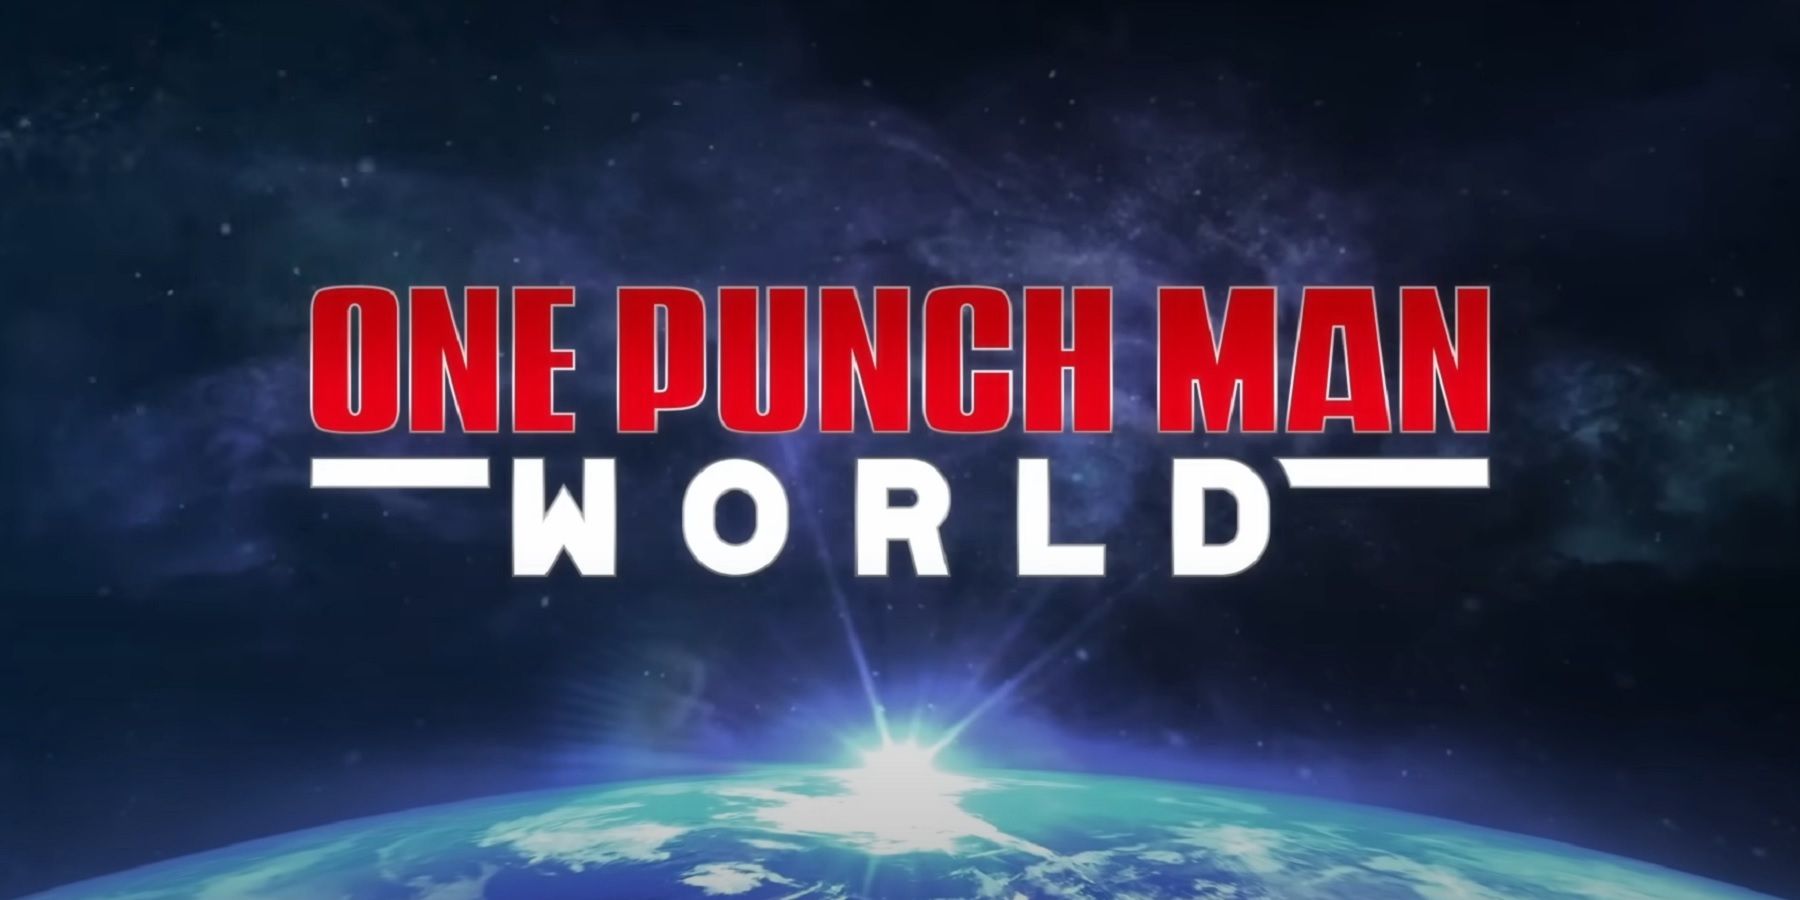 One Punch Man: World - Official Launch Date Announcement Trailer 